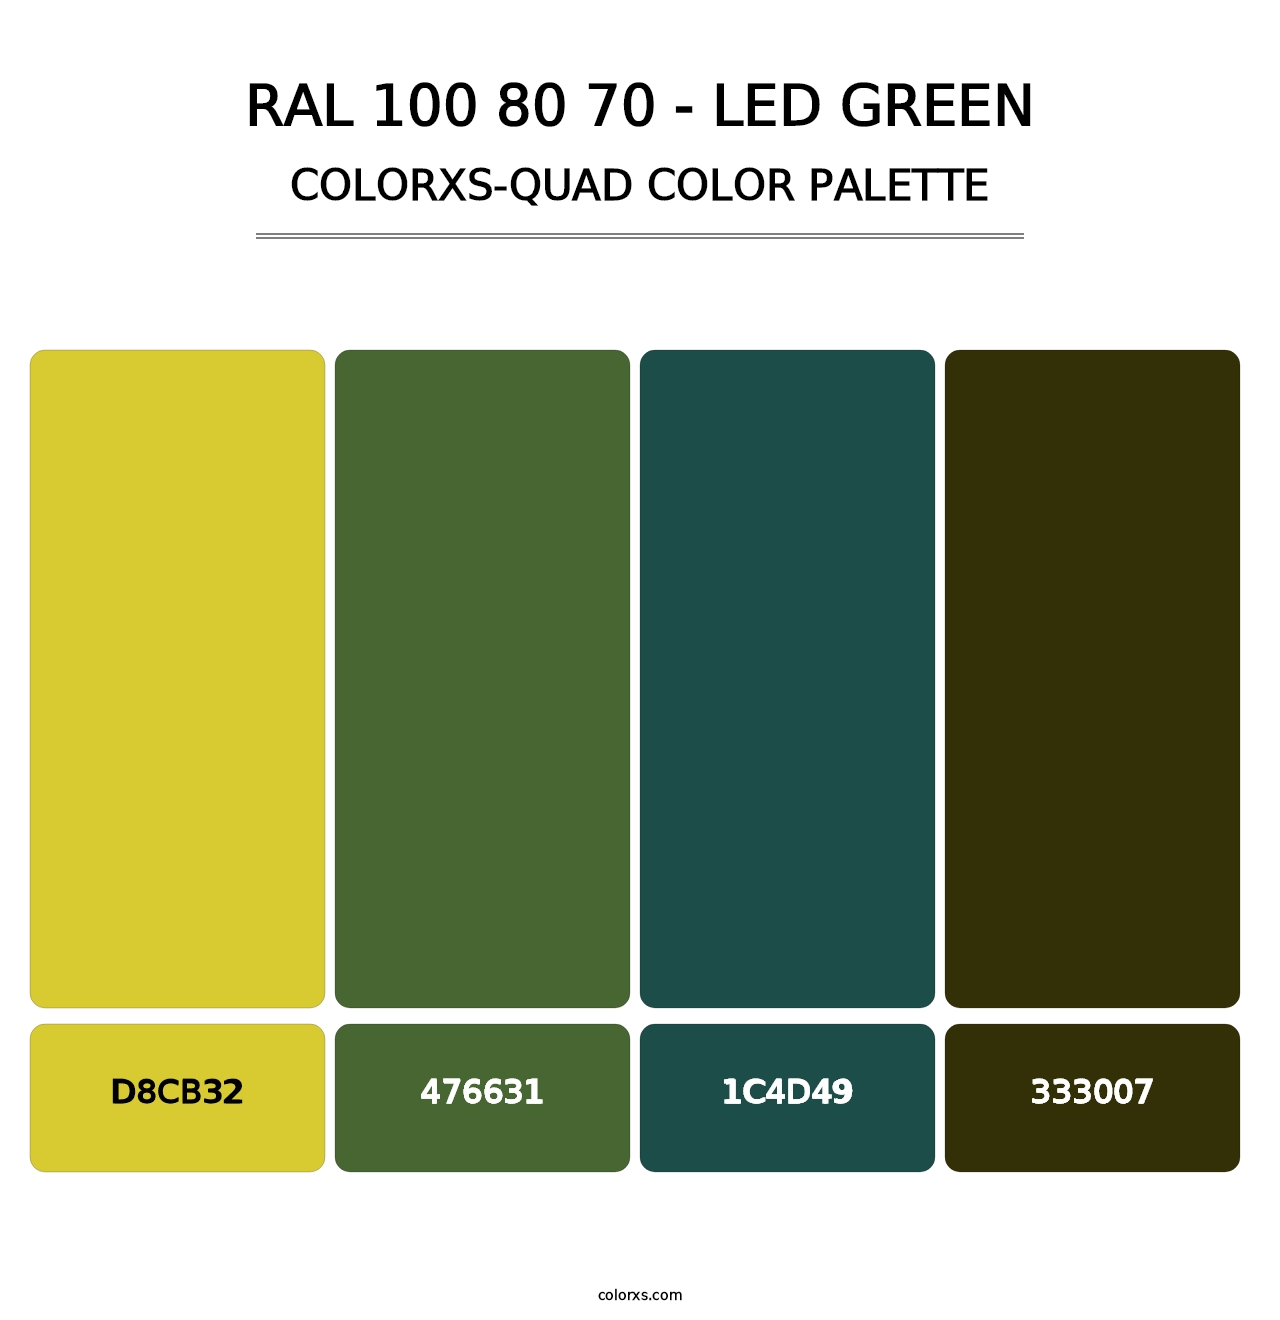 RAL 100 80 70 - LED Green - Colorxs Quad Palette